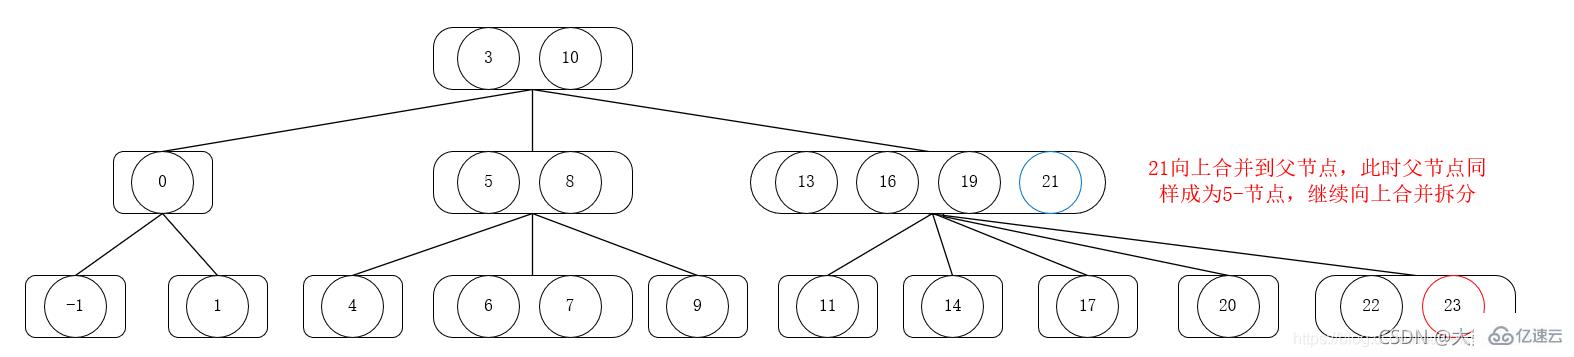 Java数据结构与算法的示例分析